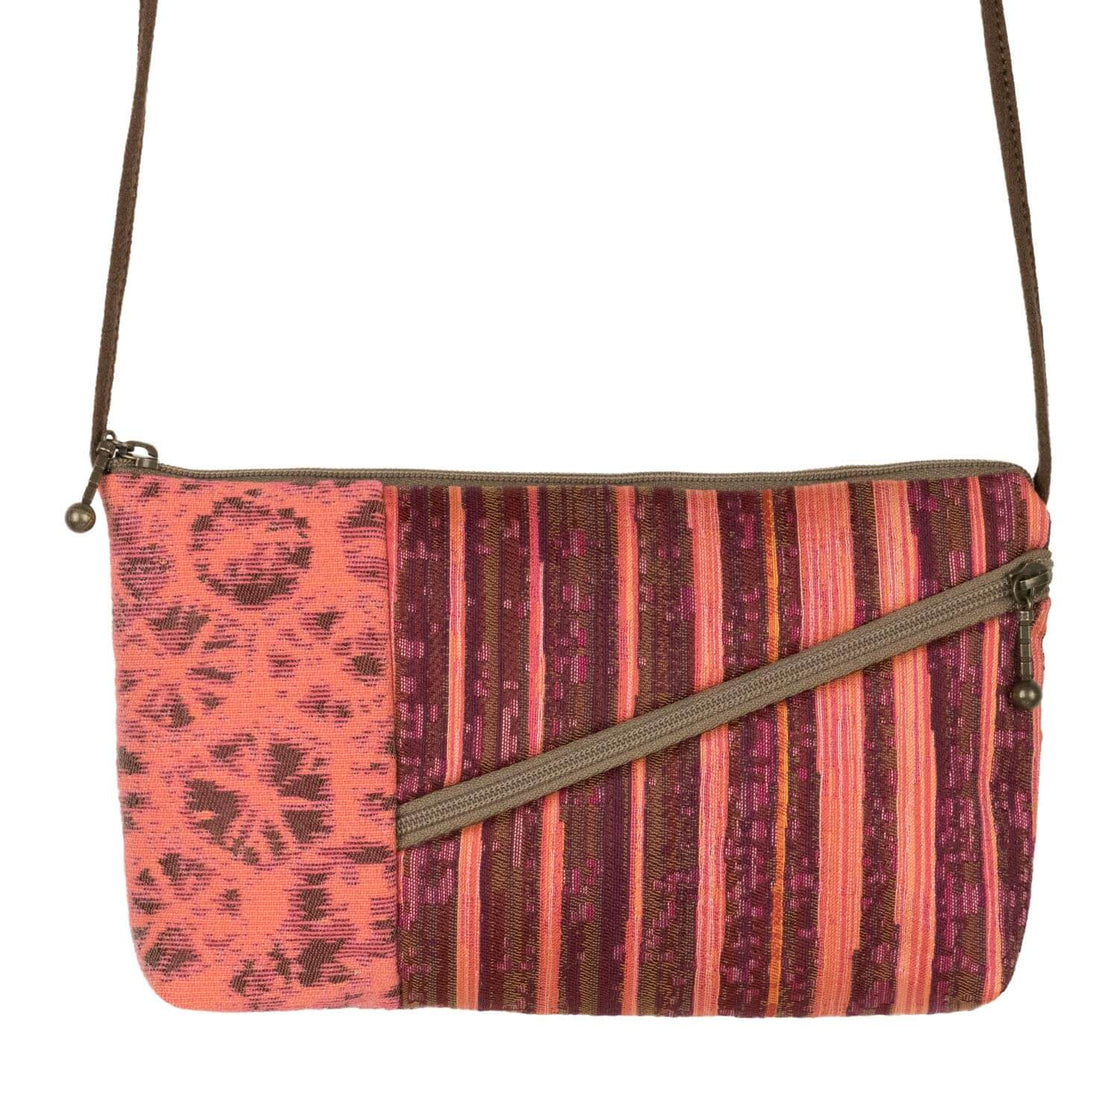 Small Handbags - Buy Small Handbags Online in India